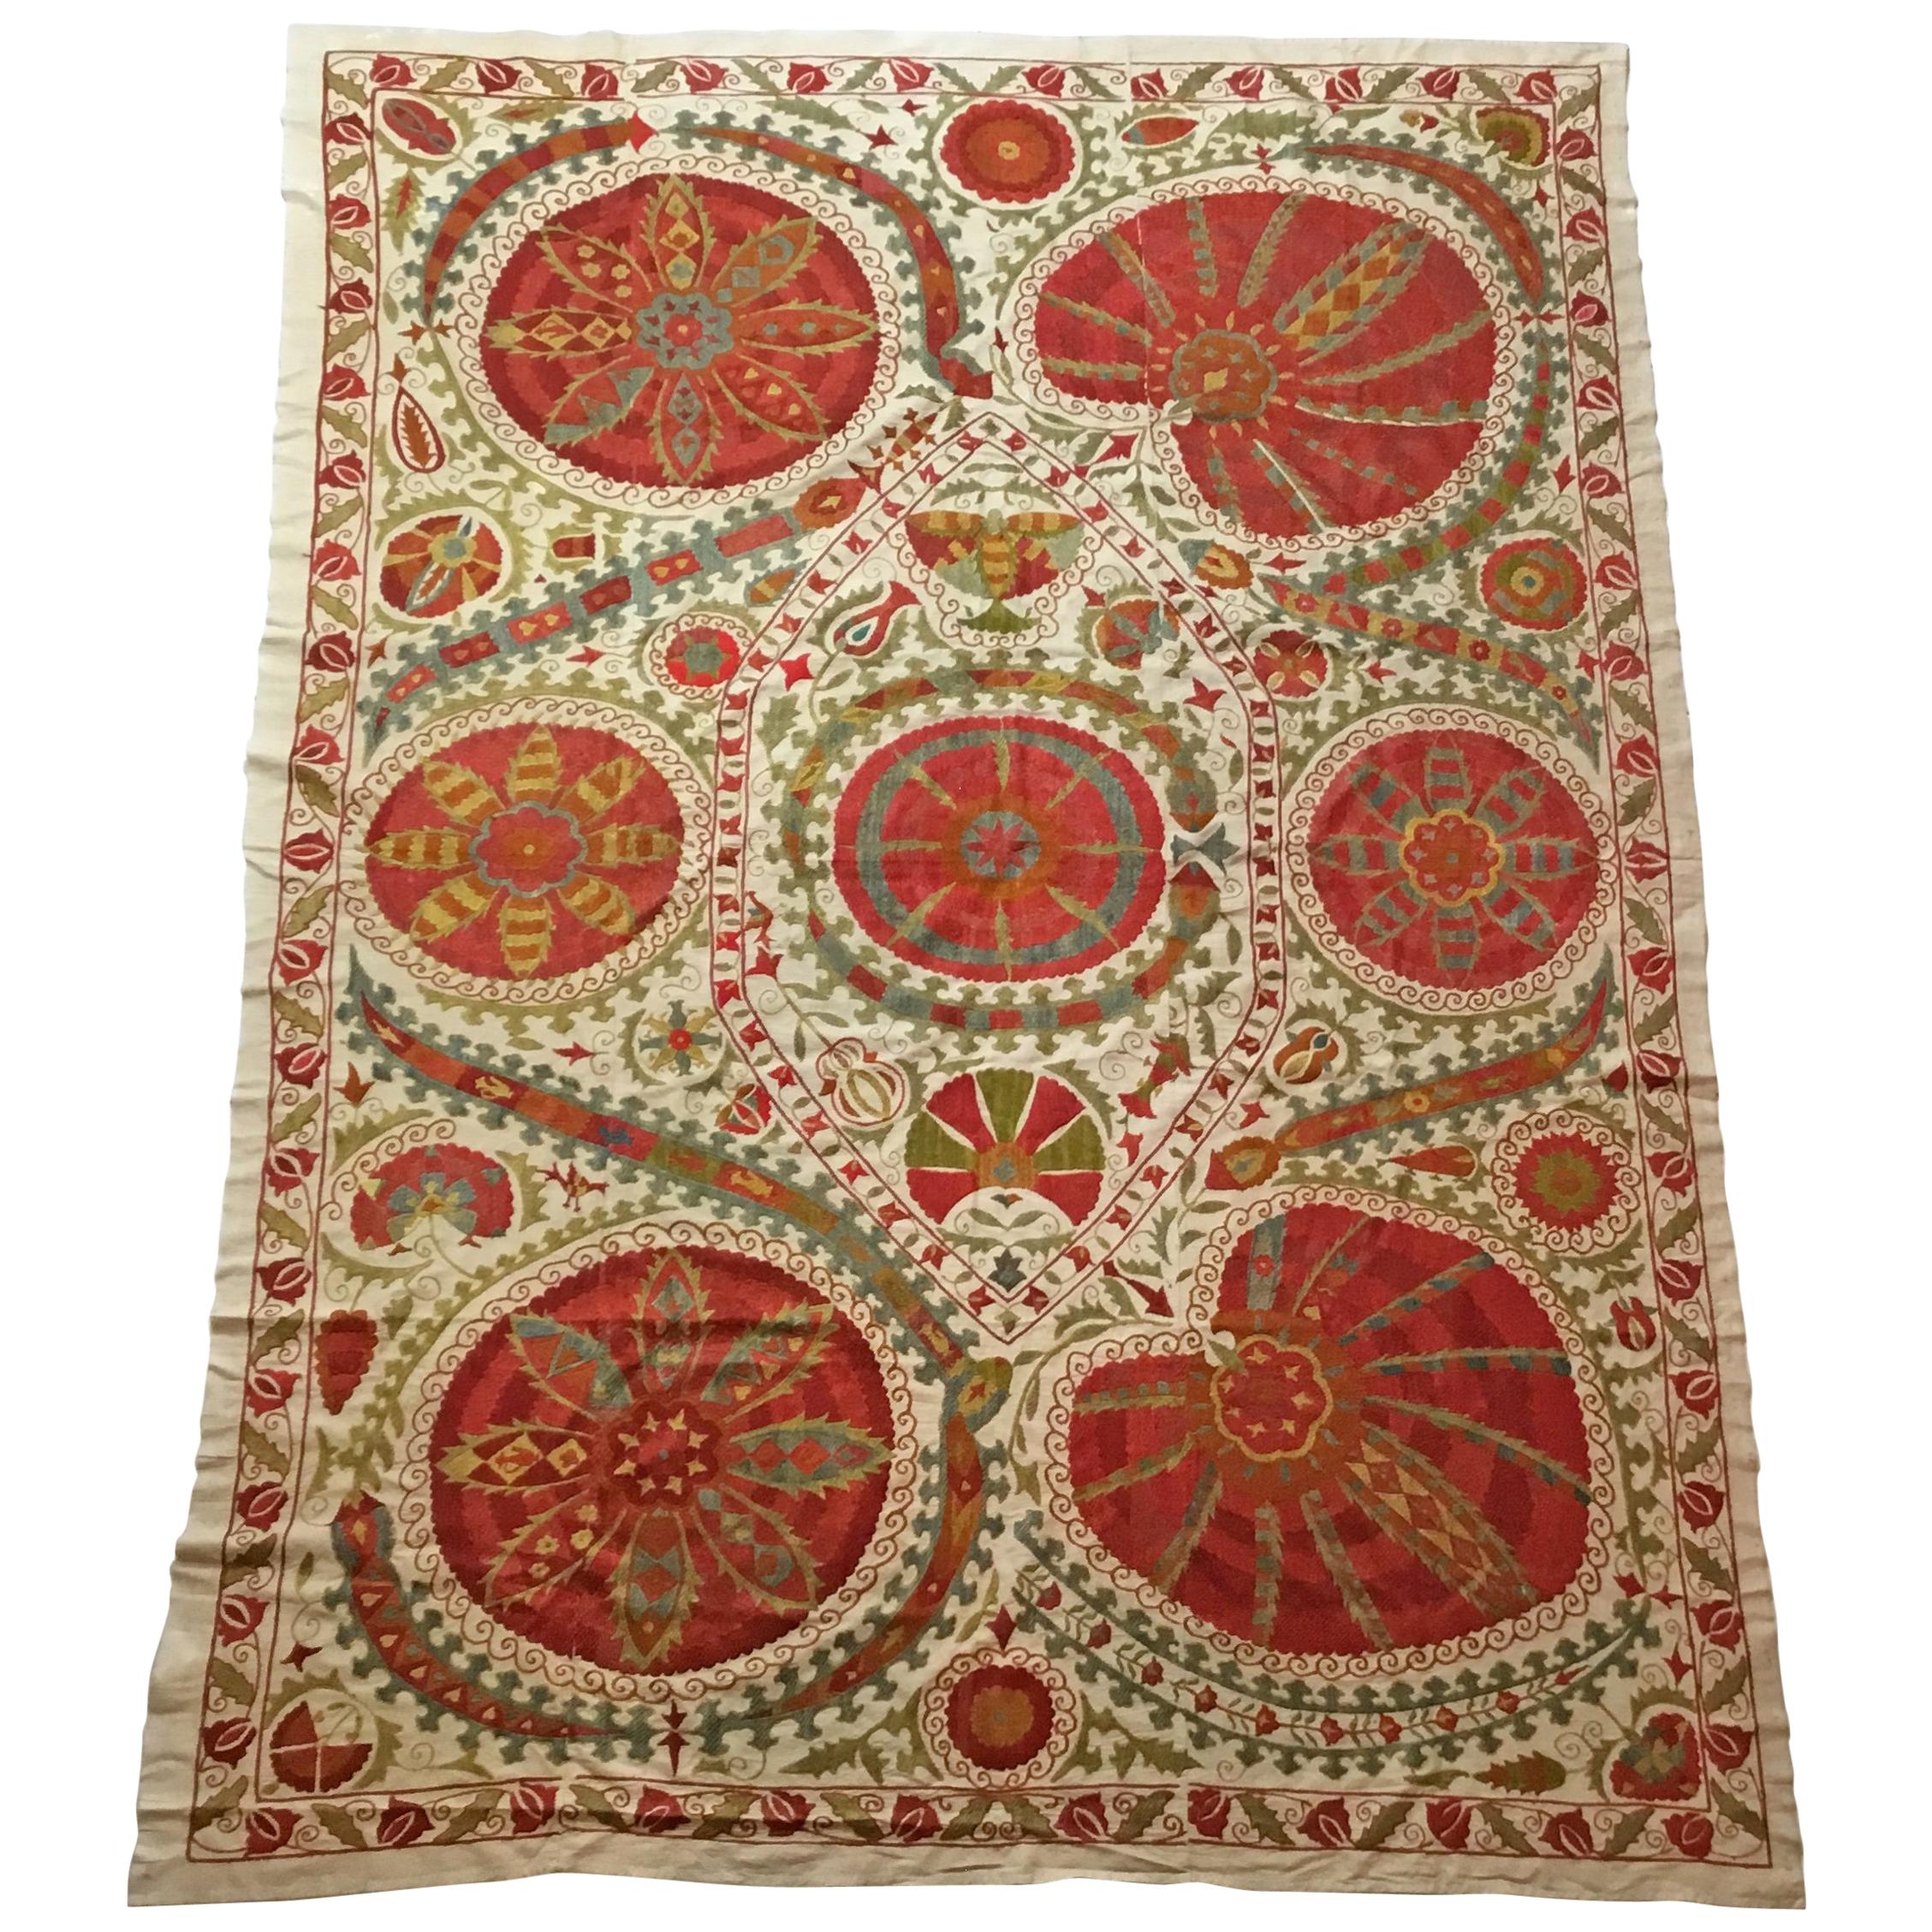 Large Vintage Embroidery Suzani Textile